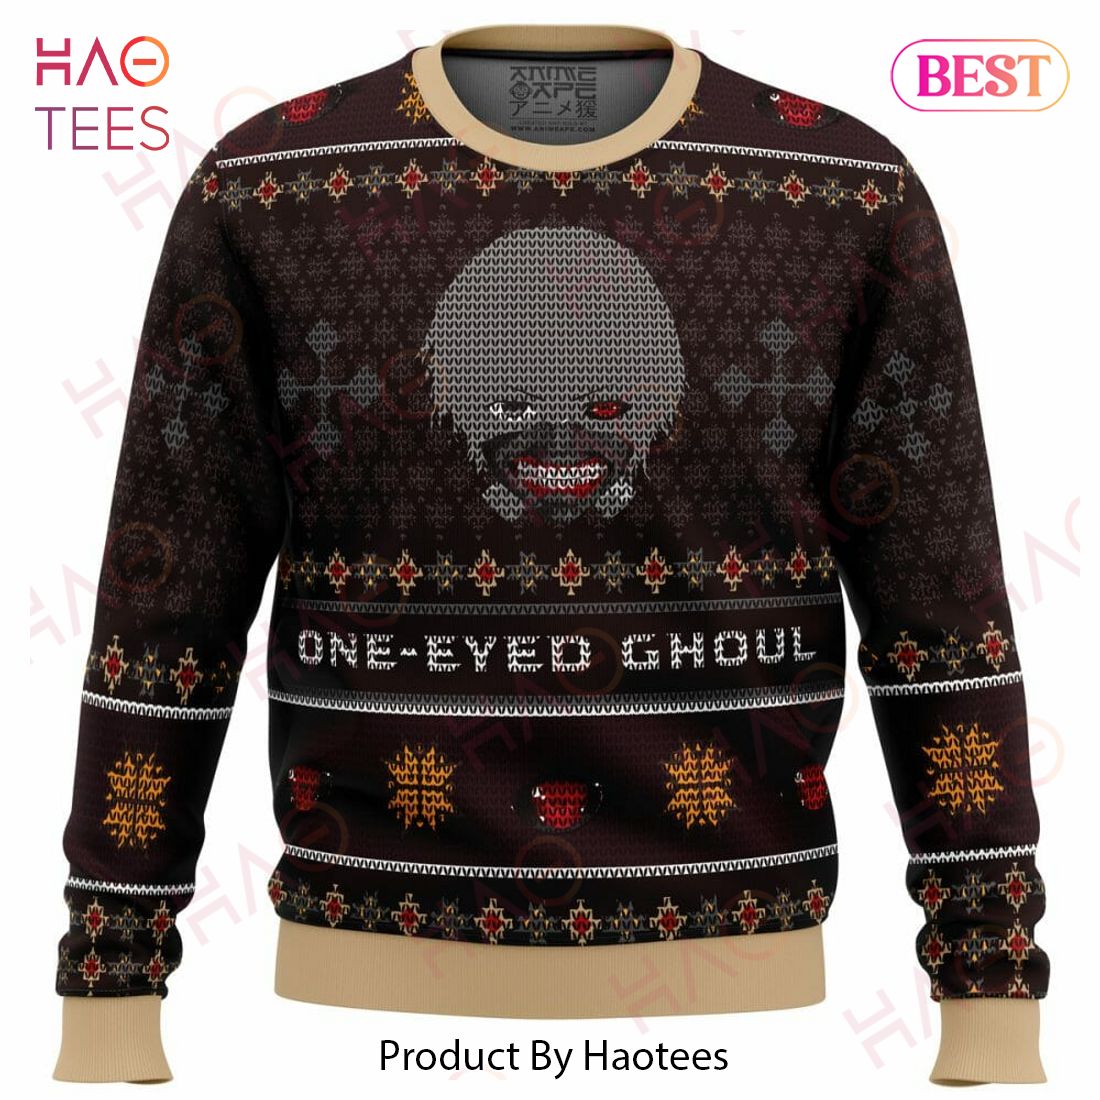 Ken Kaneki One-Eyed Ghoul Tokyo Ghoul Ugly Christmas Sweater